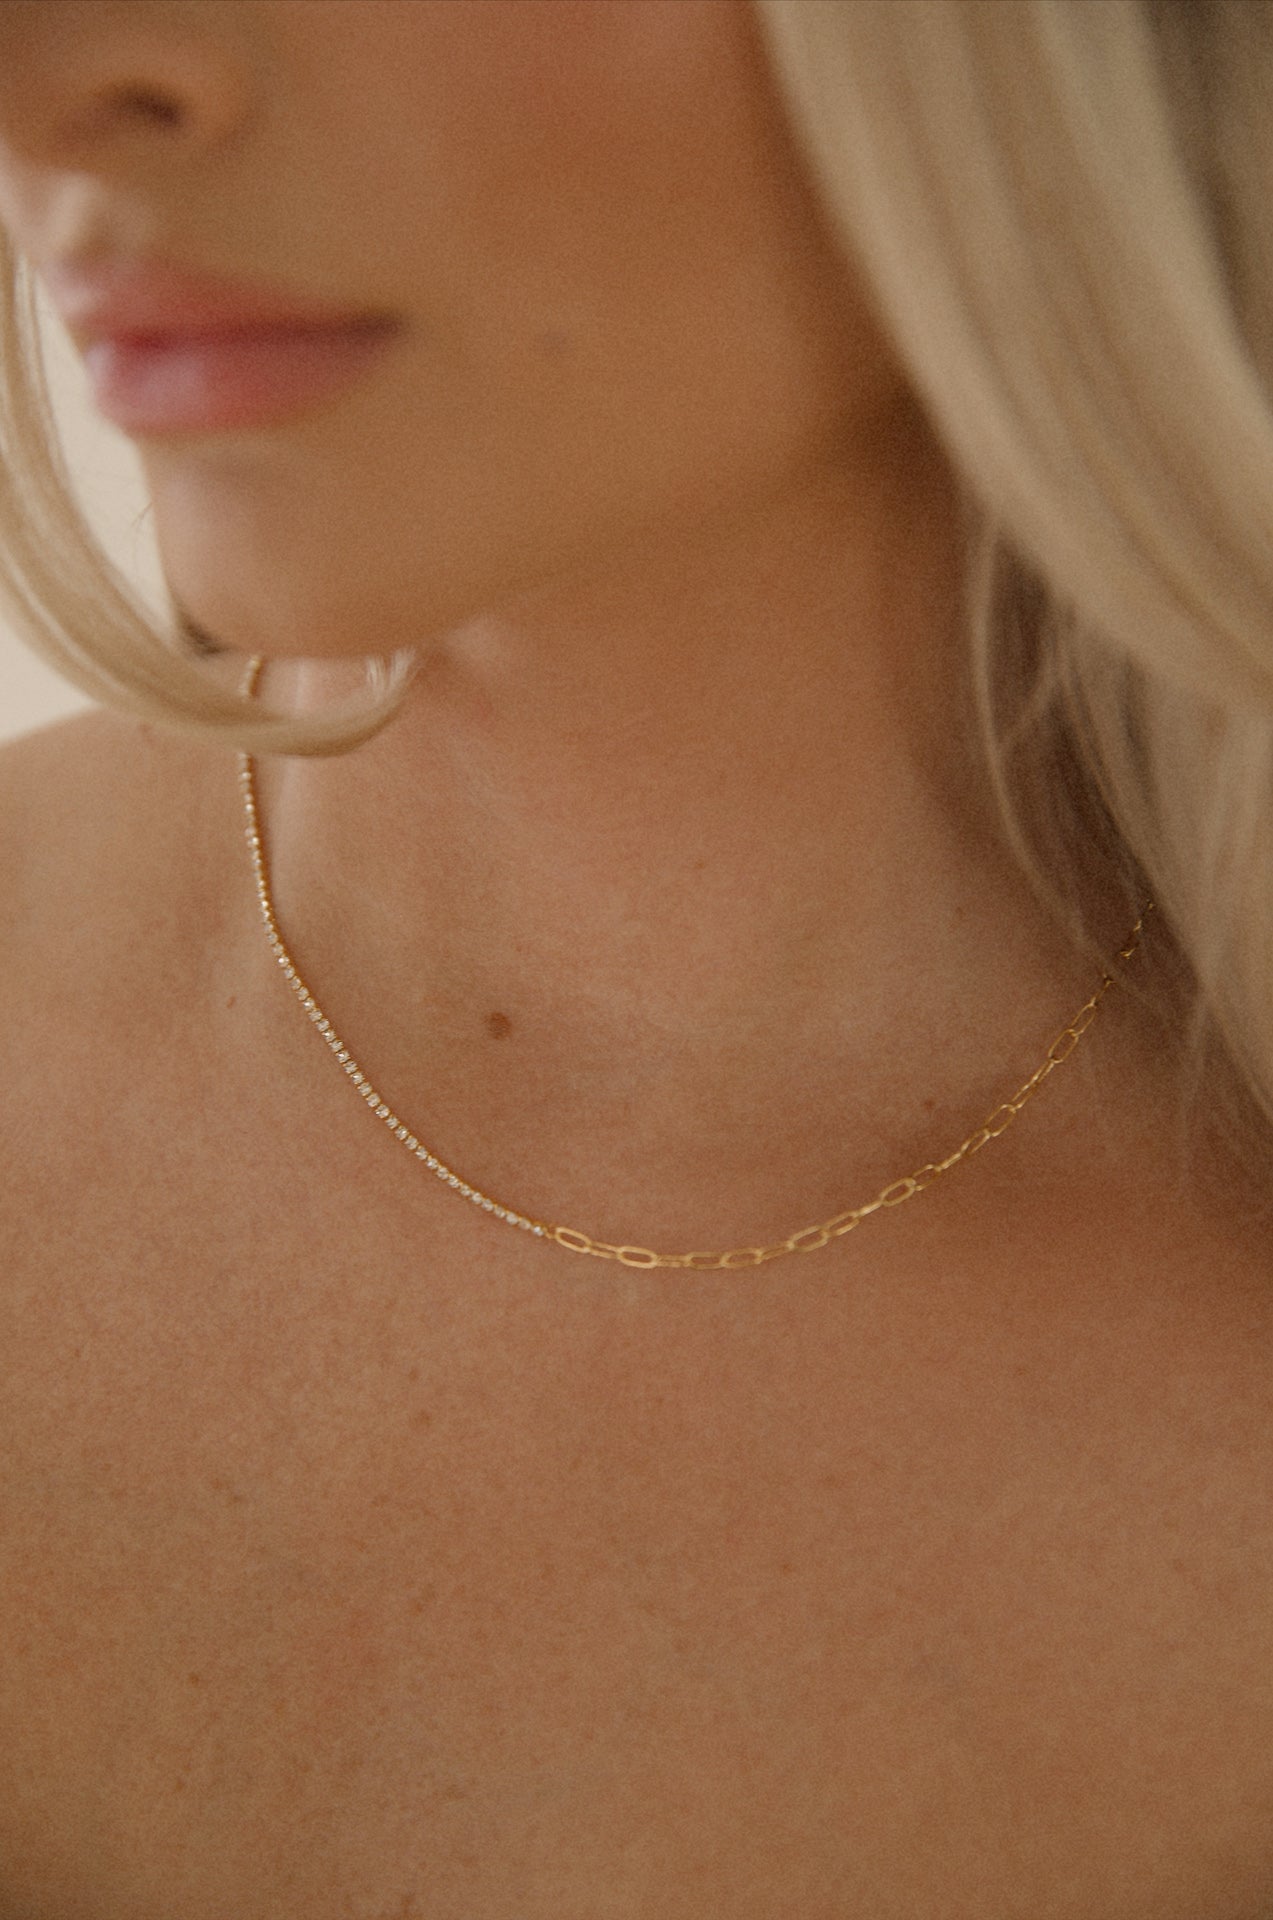 Rhinestone Dainty Chain Necklace